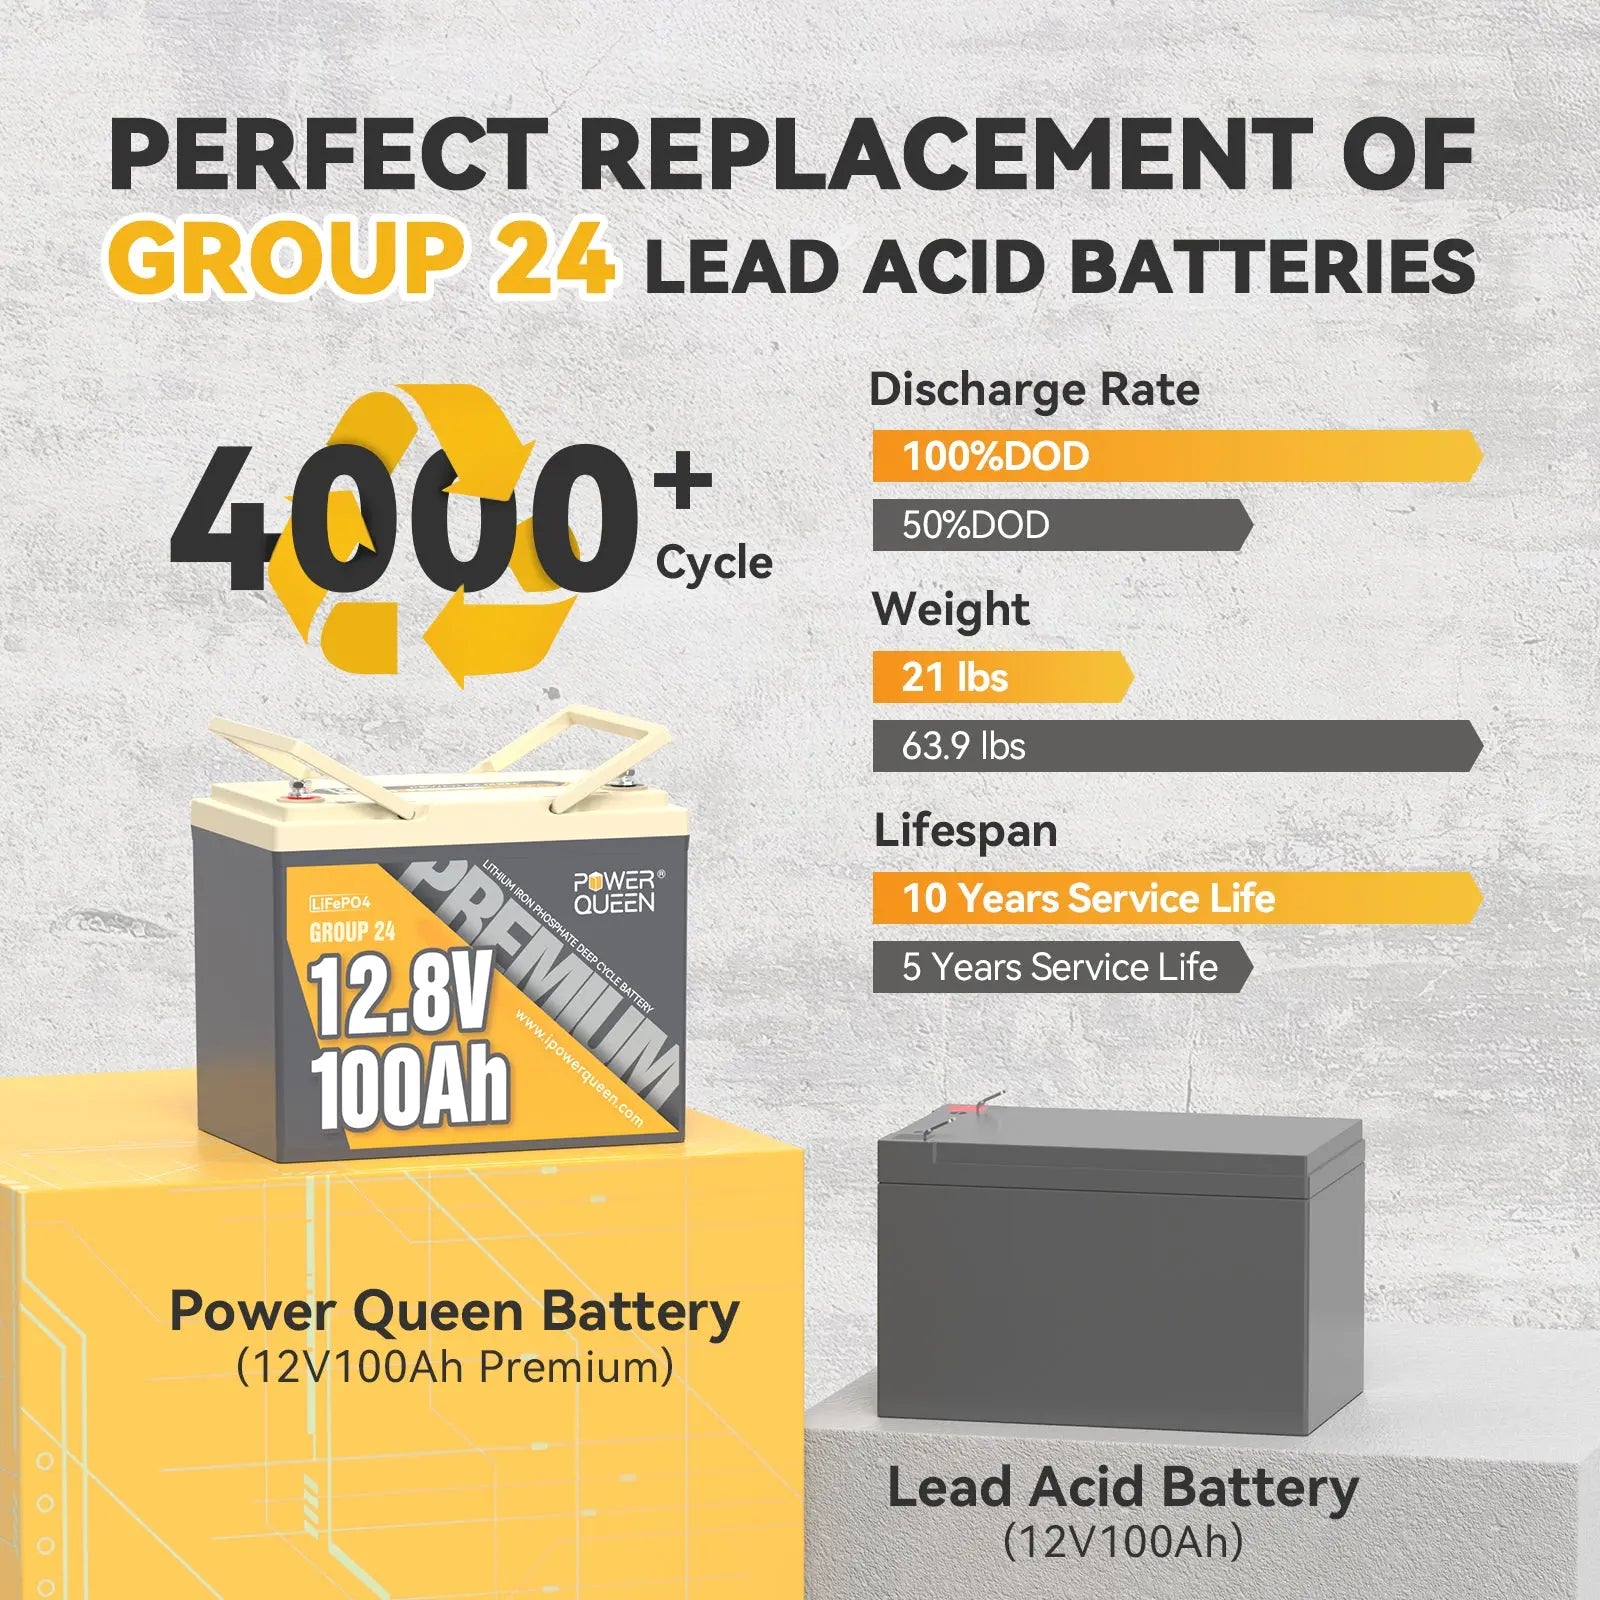 Power Queen lithium Group 24 batteries